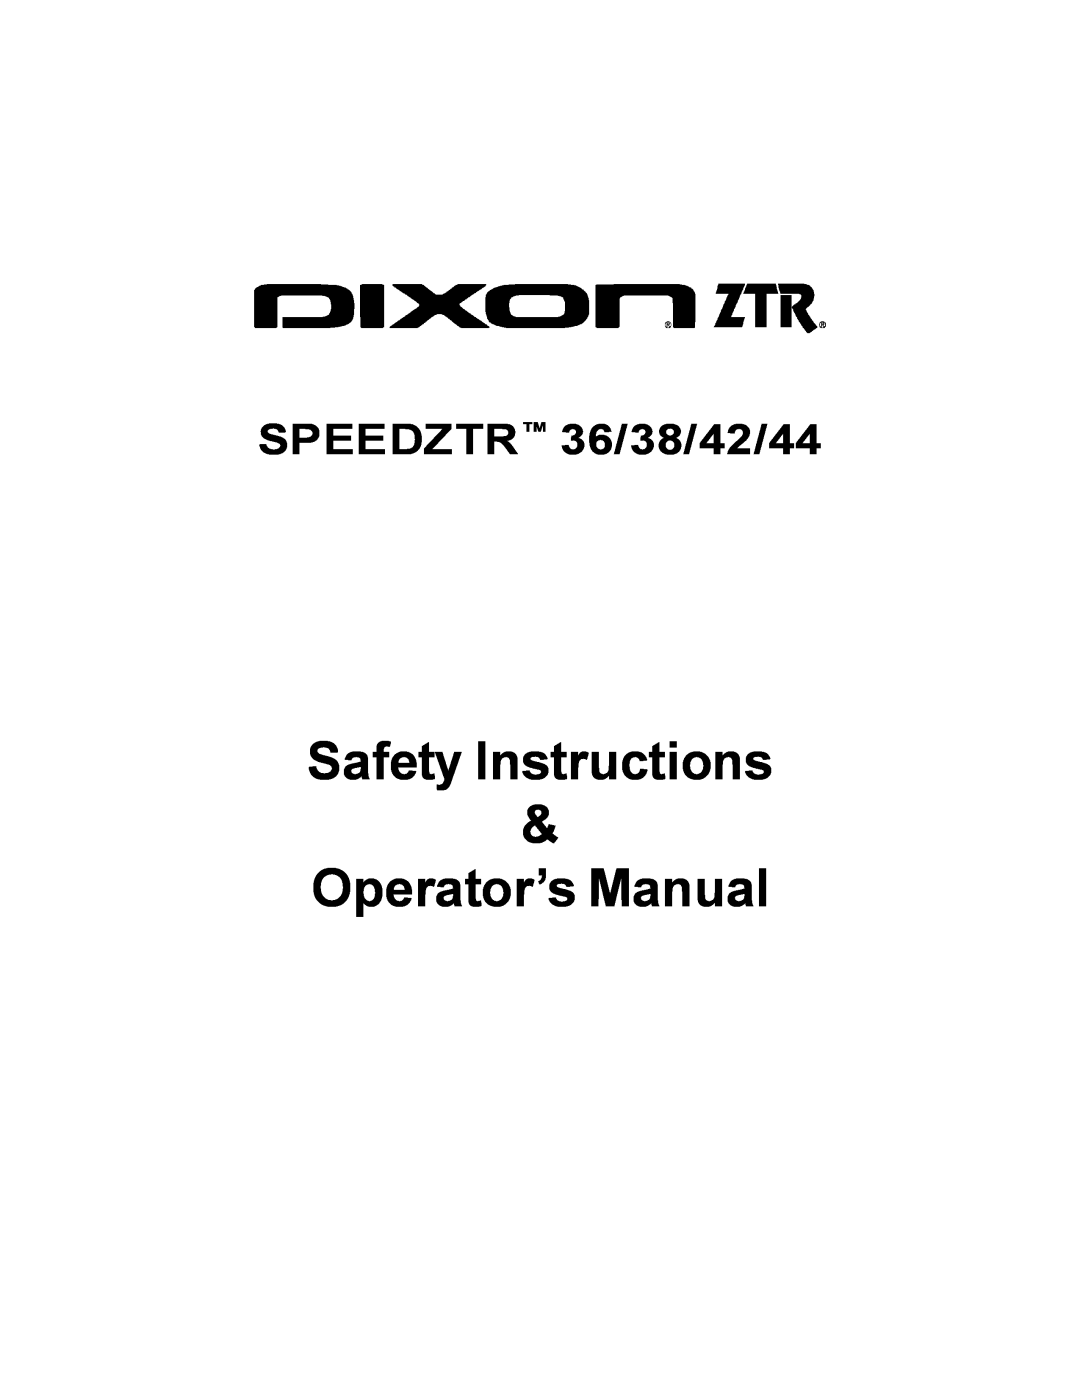 Dixon manual Safety Instructions, Operator’s Manual, SPEEDZTR 36/38/42/44 